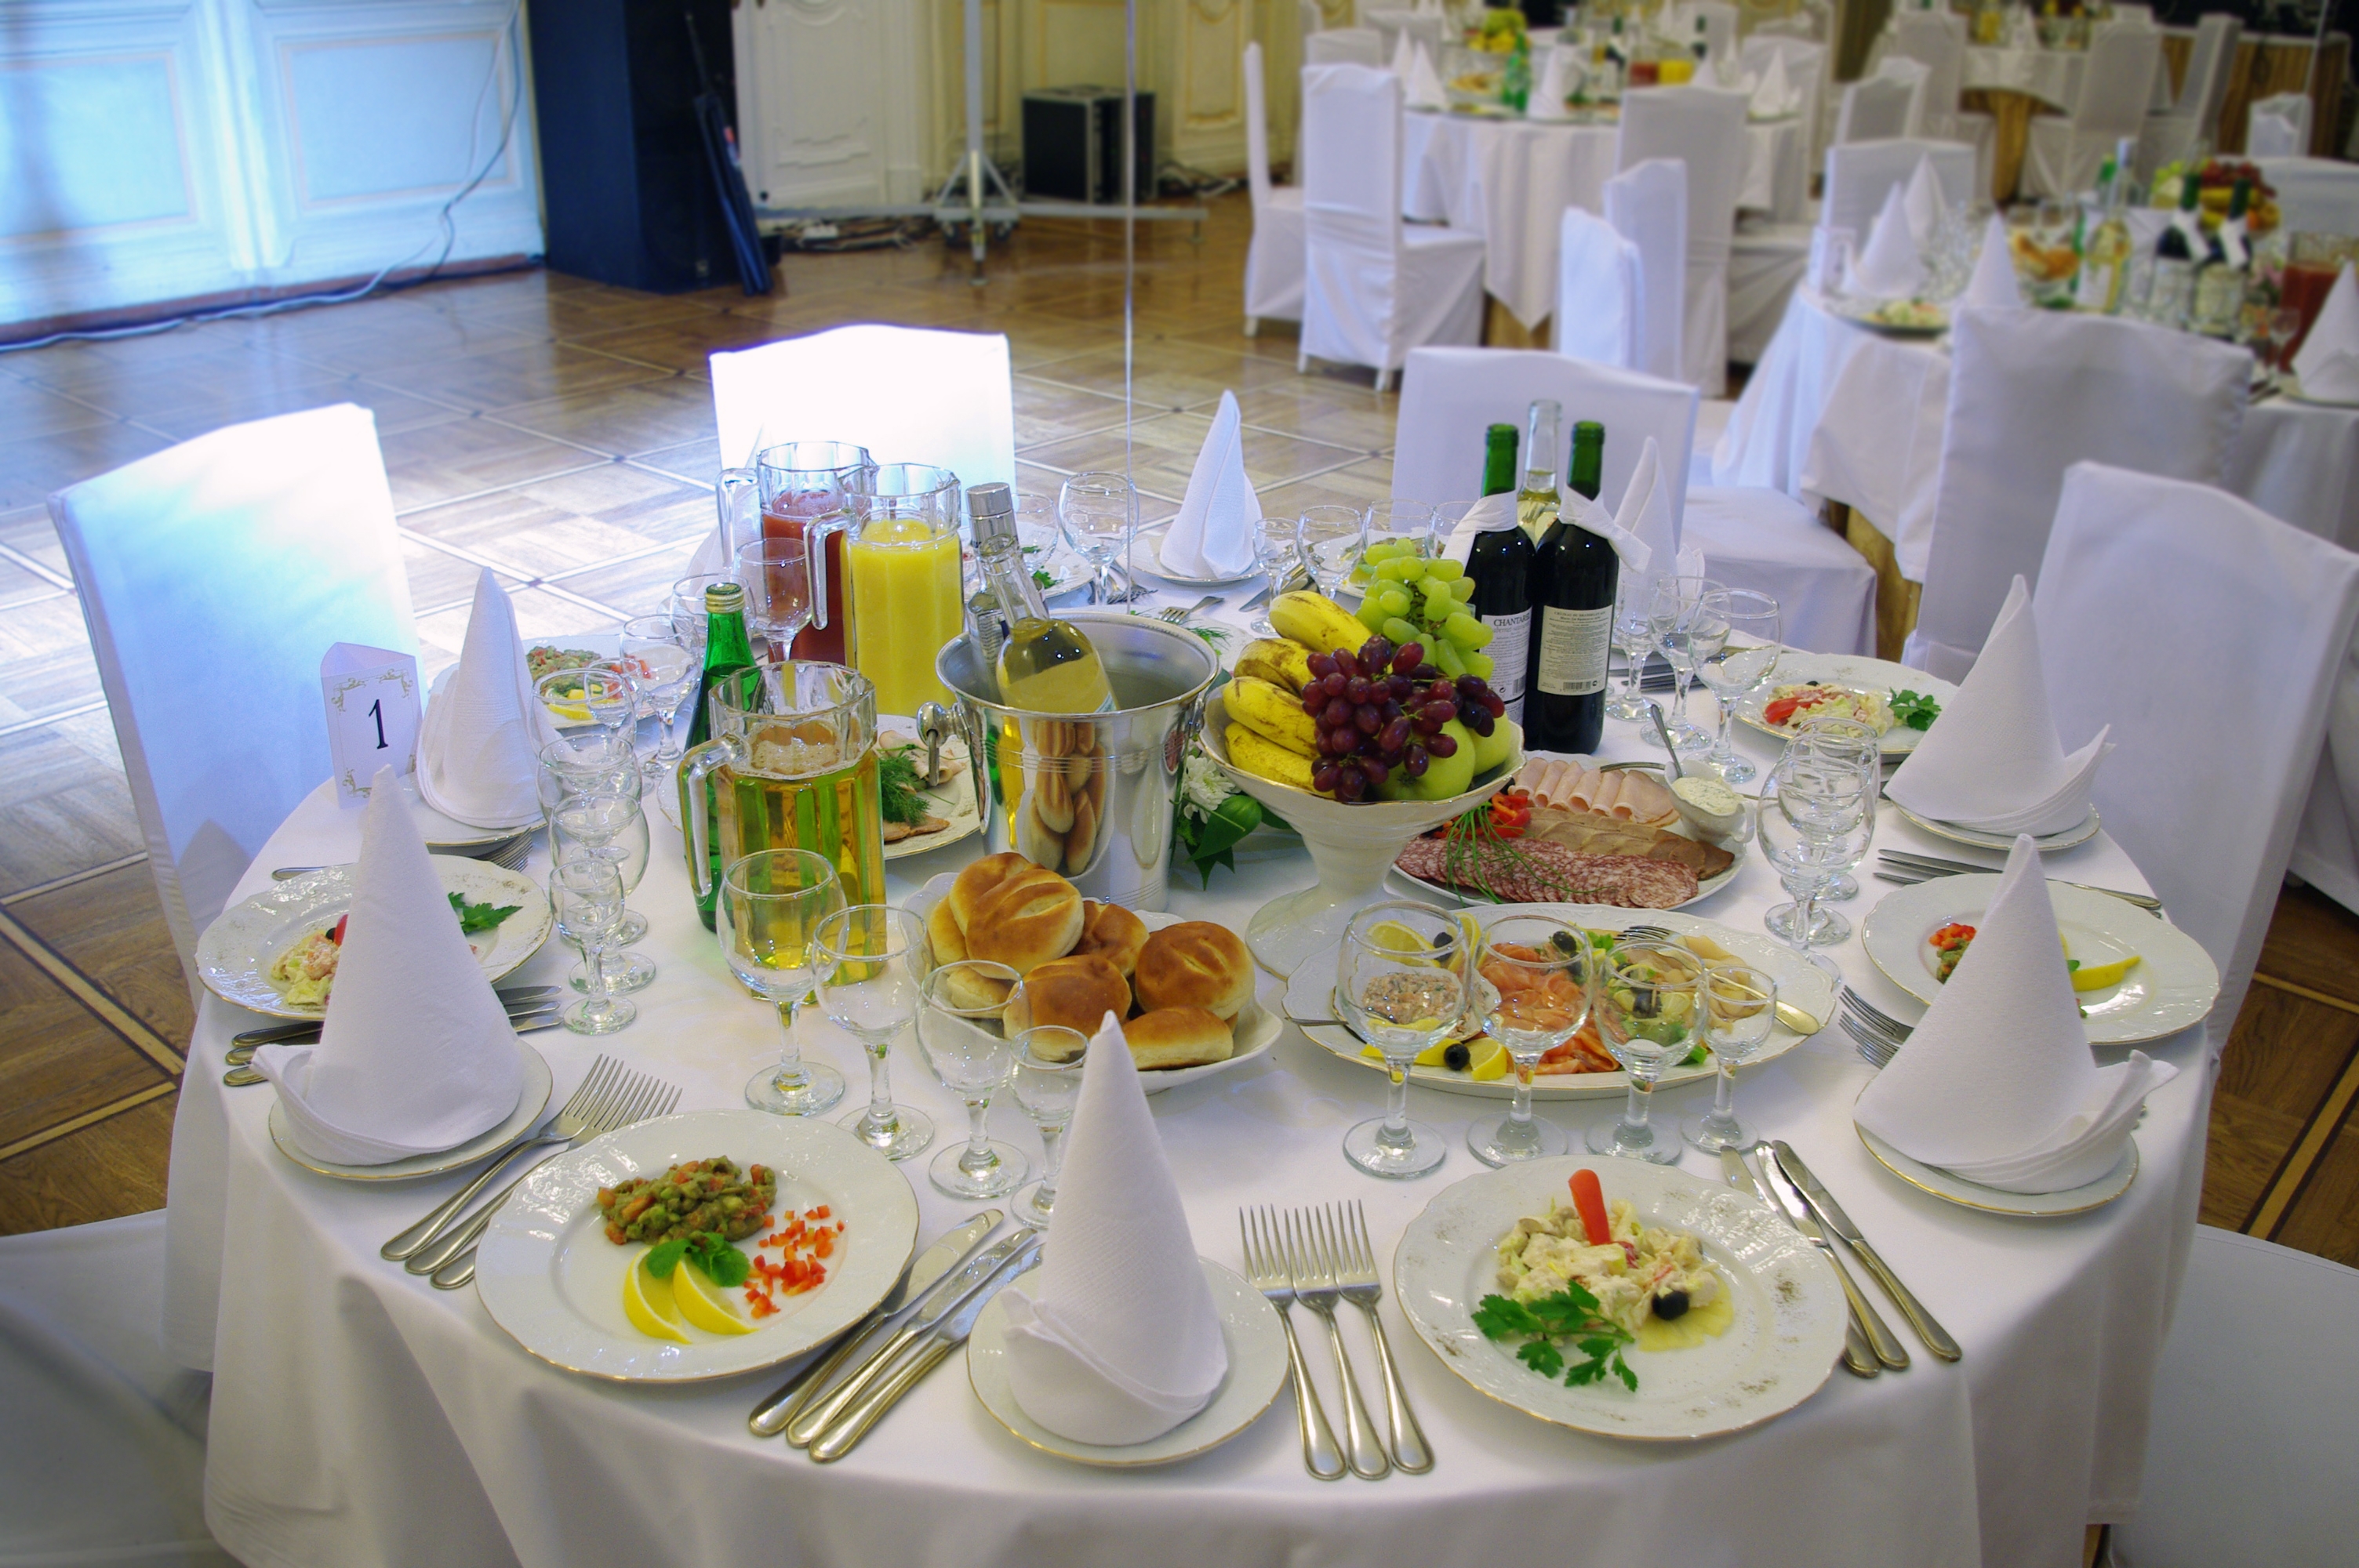 <Блюда ресторана в Николаевском дворце - Food in Restaurants and banquet halls of the Nicholas Palace in St. Petersburgn